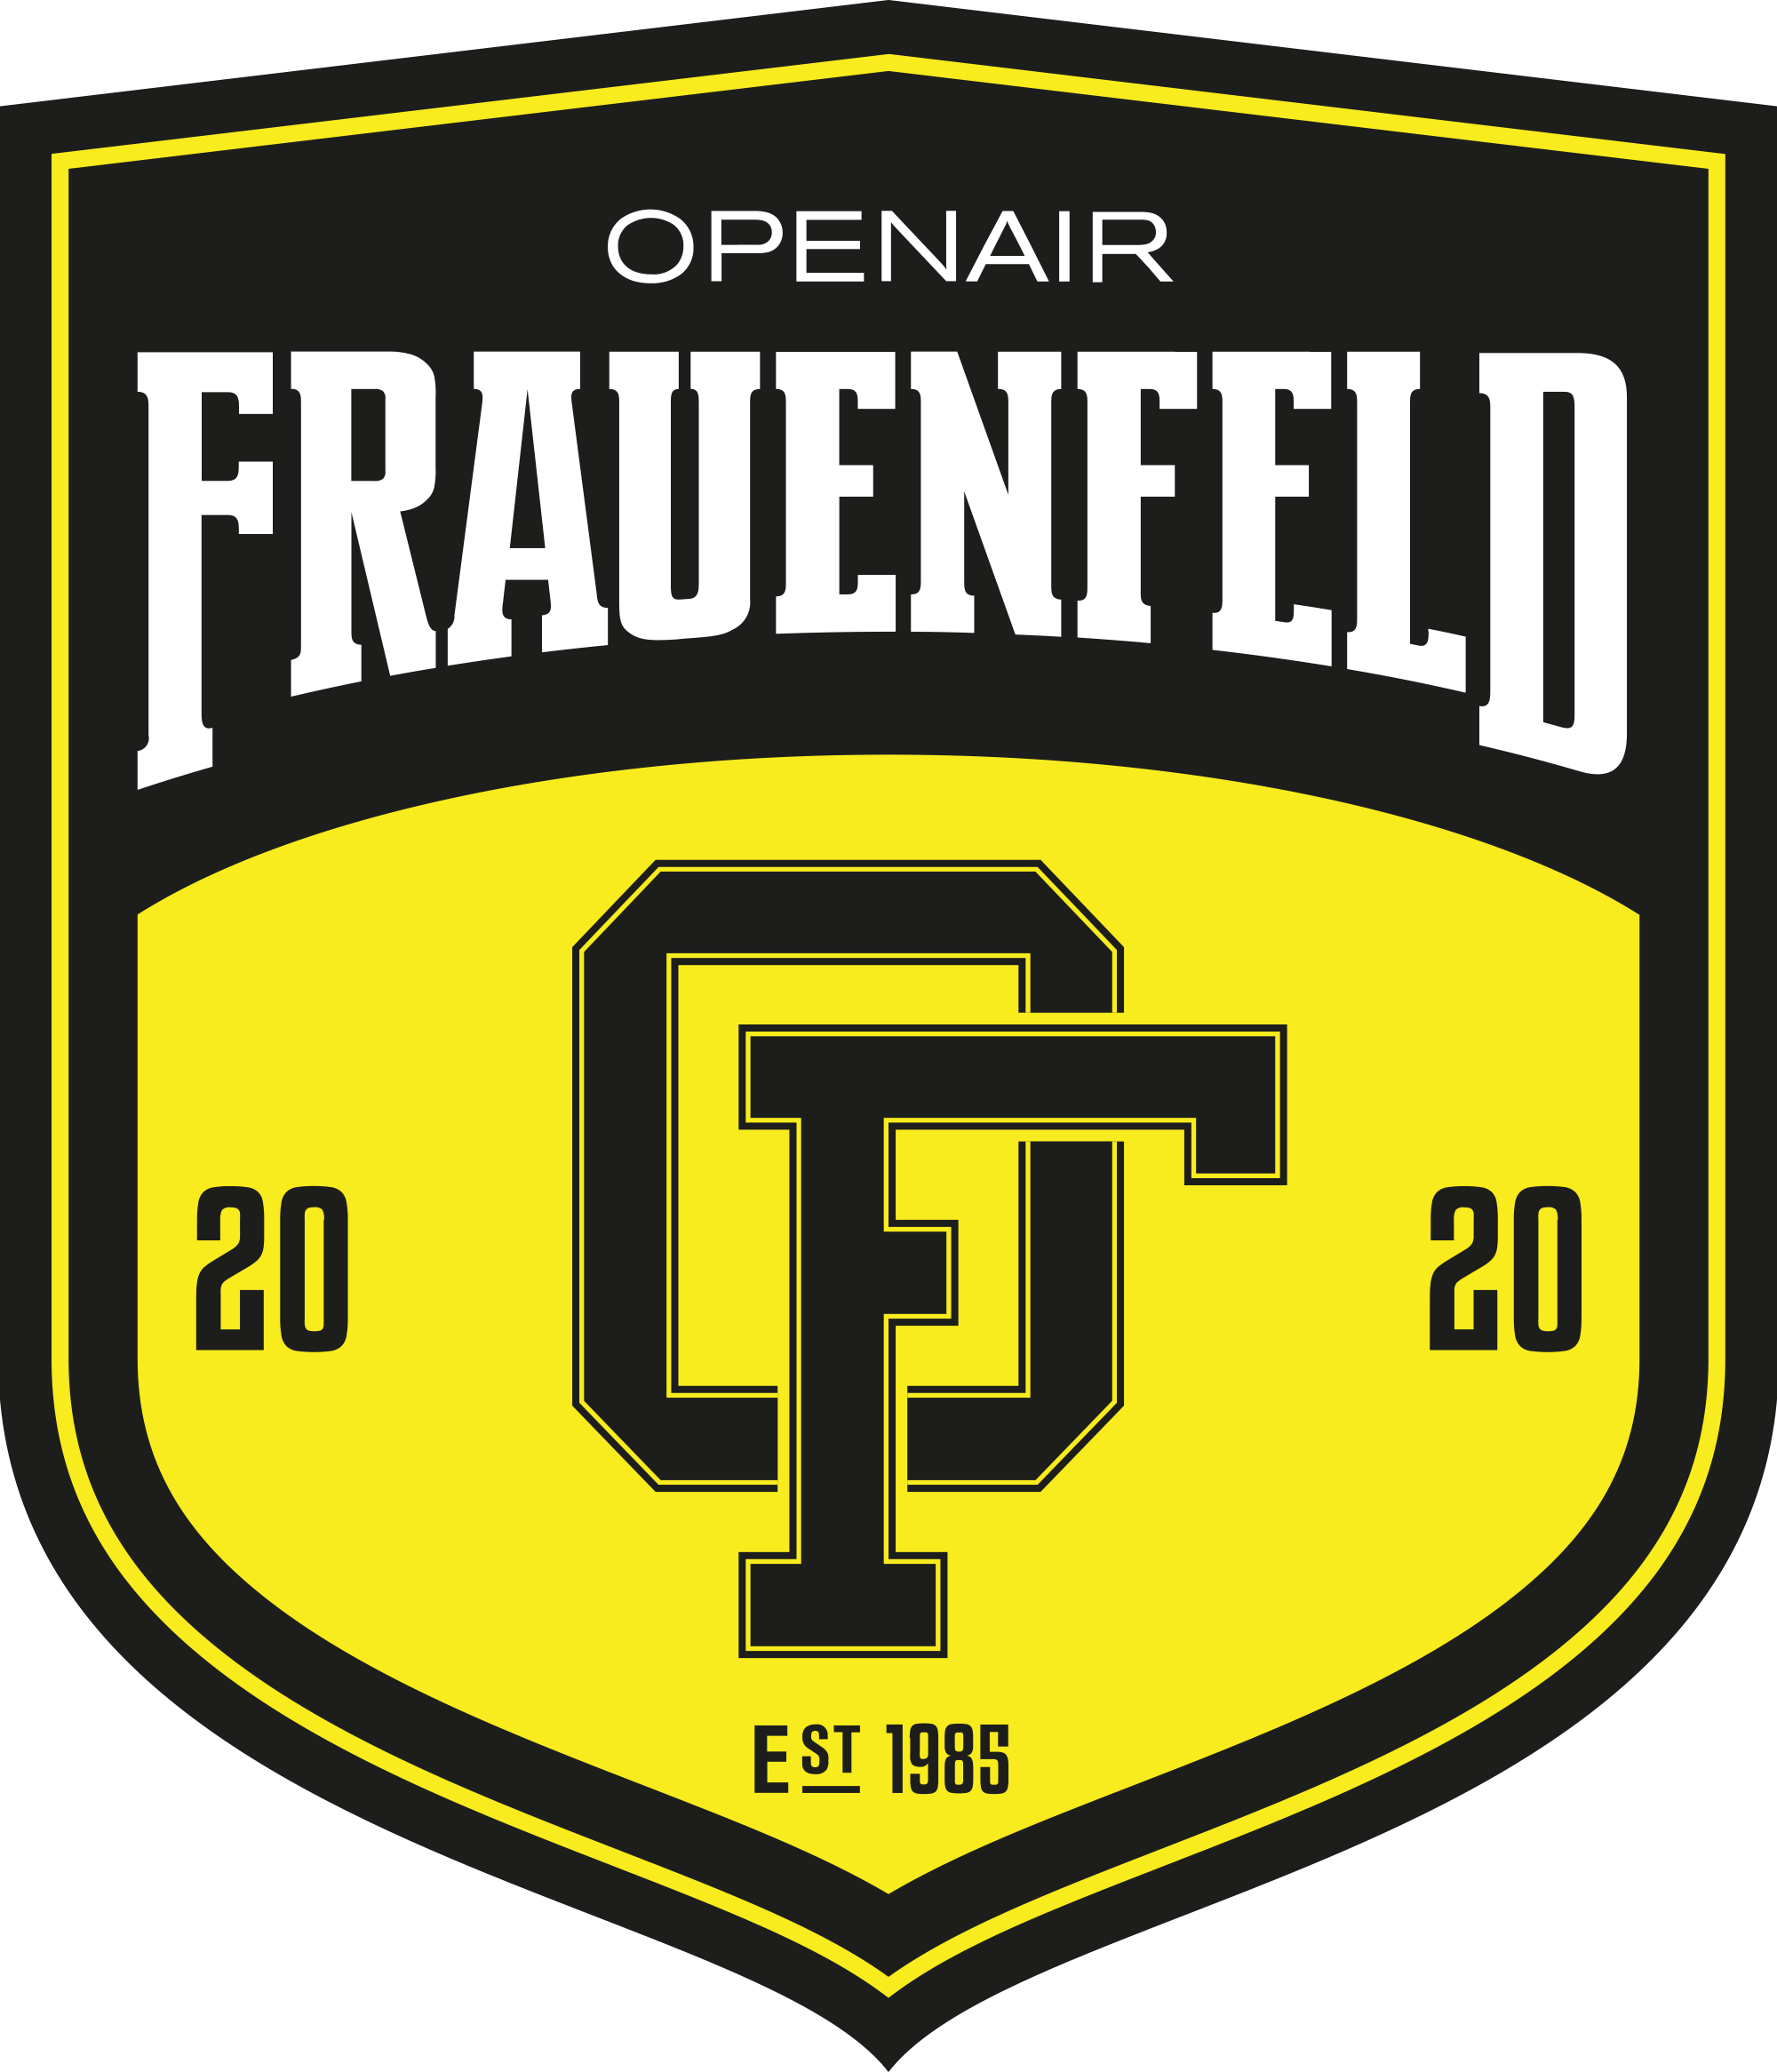 openair frauenfeldben 2021 dátumait)